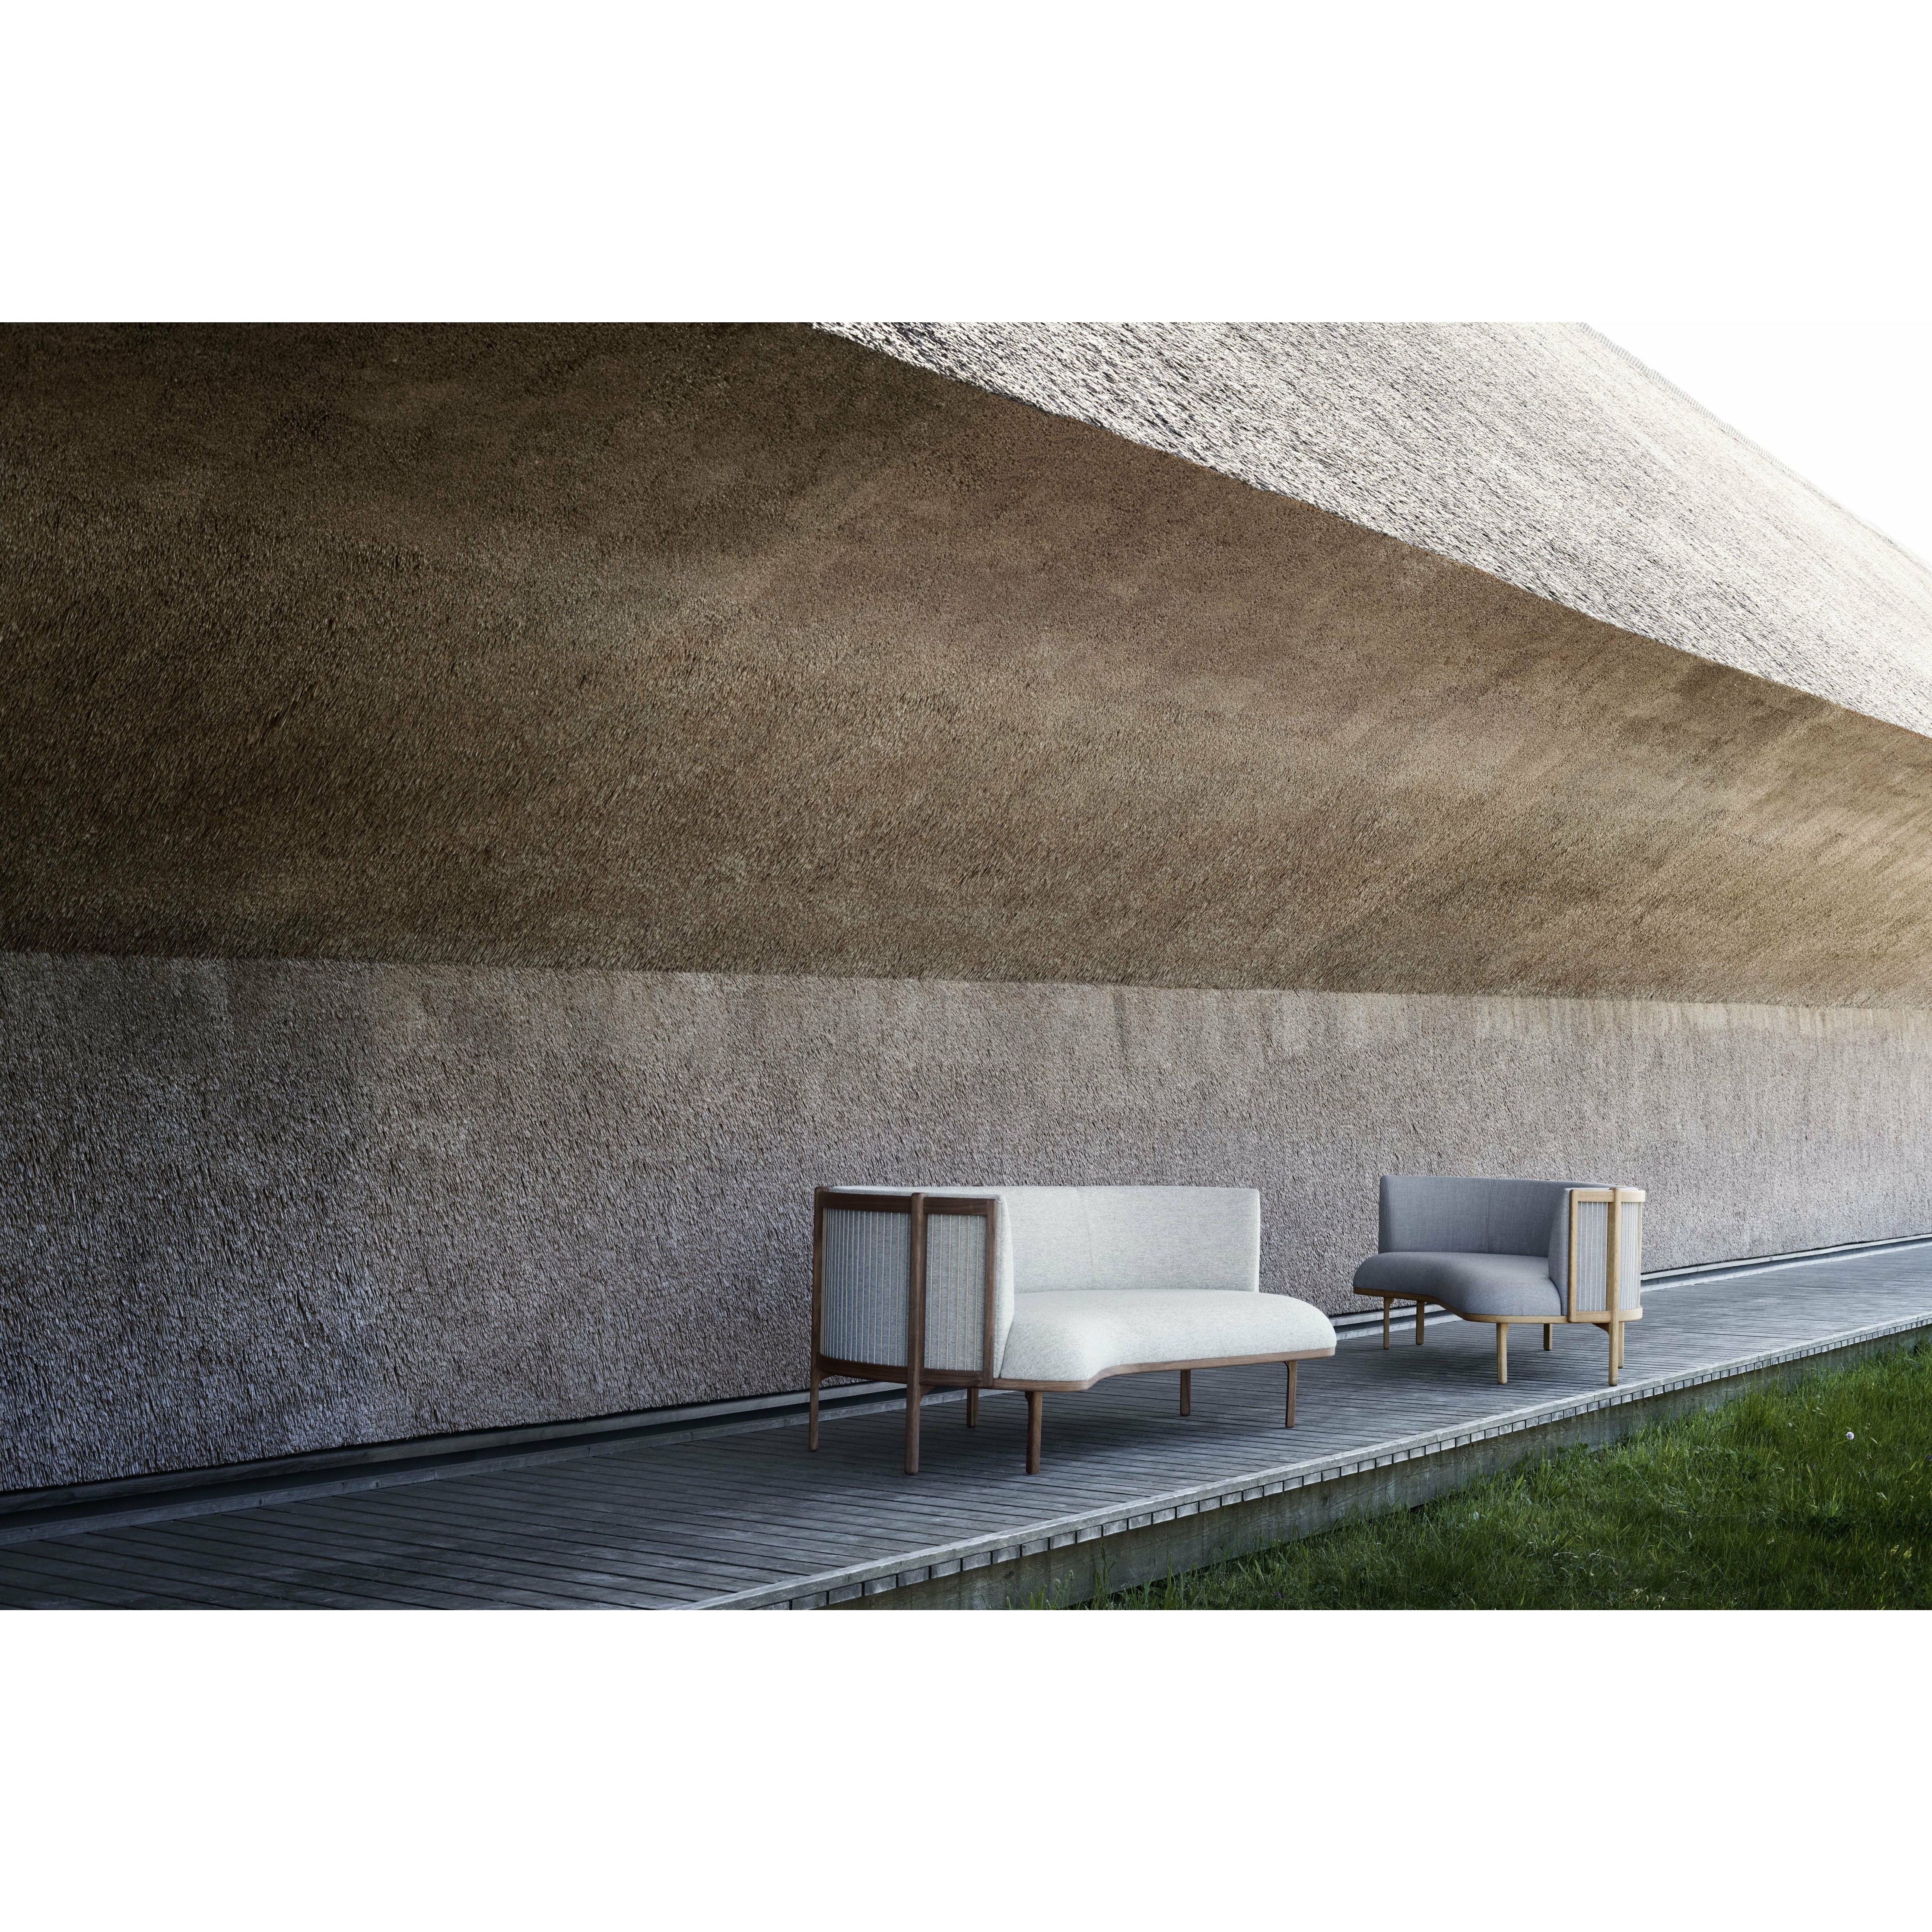 Carl Hansen RF1903 R Sideways Sofa 3 plazas de roble derecho/tela de fiord, gris/marrón natural